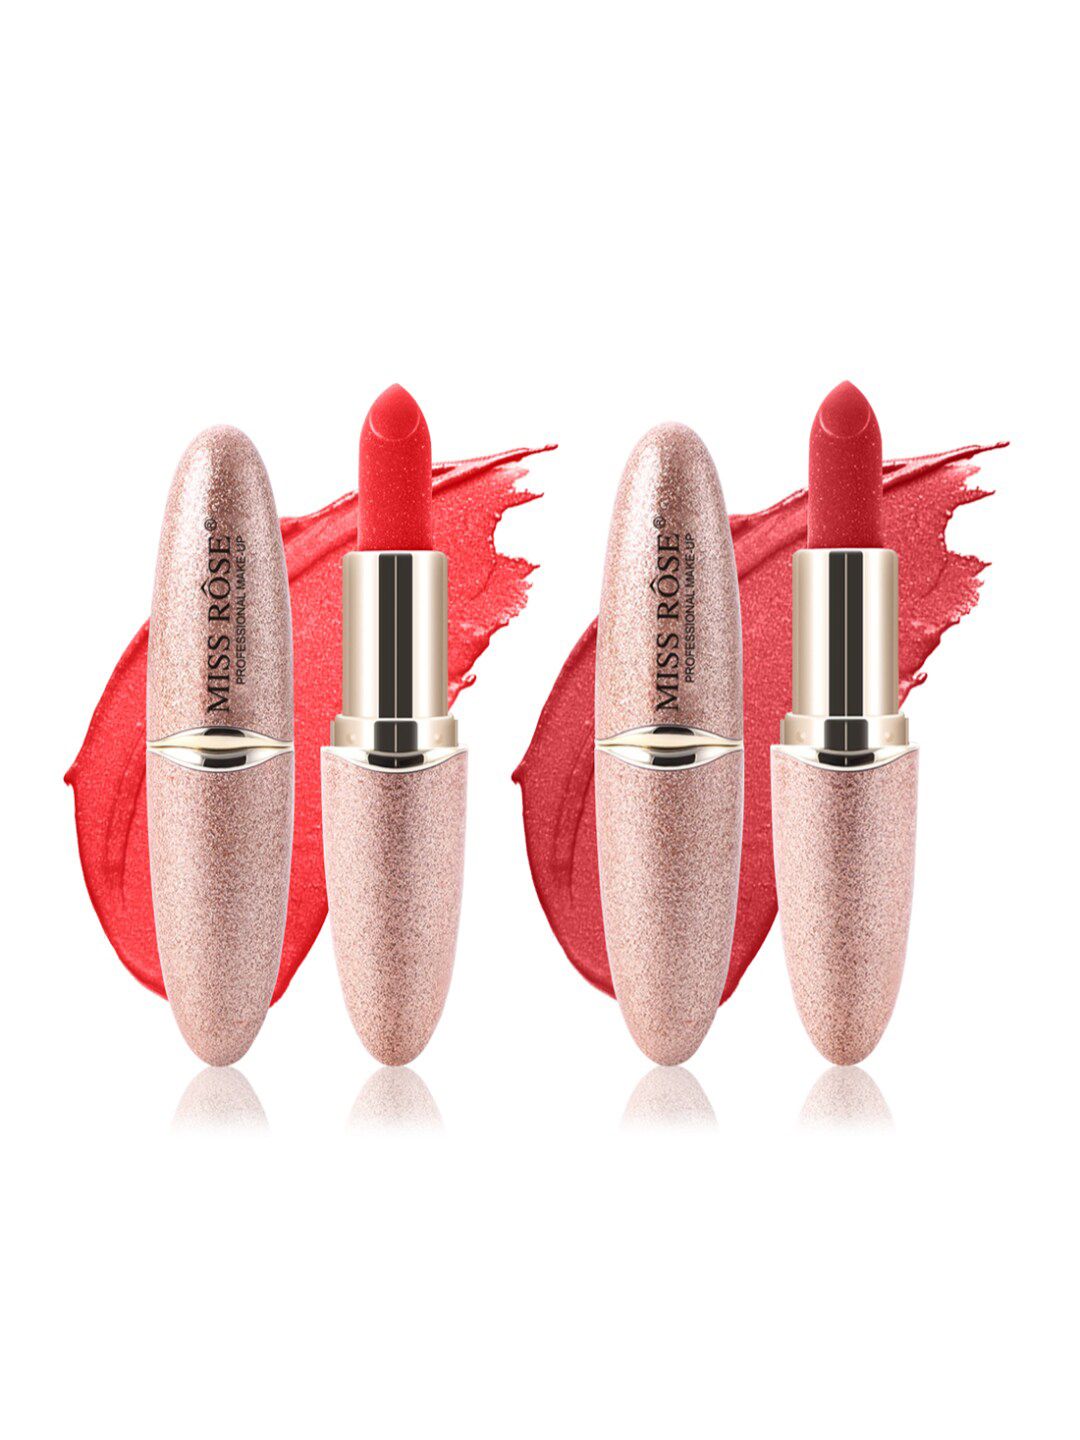 MISS ROSE Professional Make-Up Set of 2 Matte Smooth Velvet Lipstick - 43 & 48 Price in India